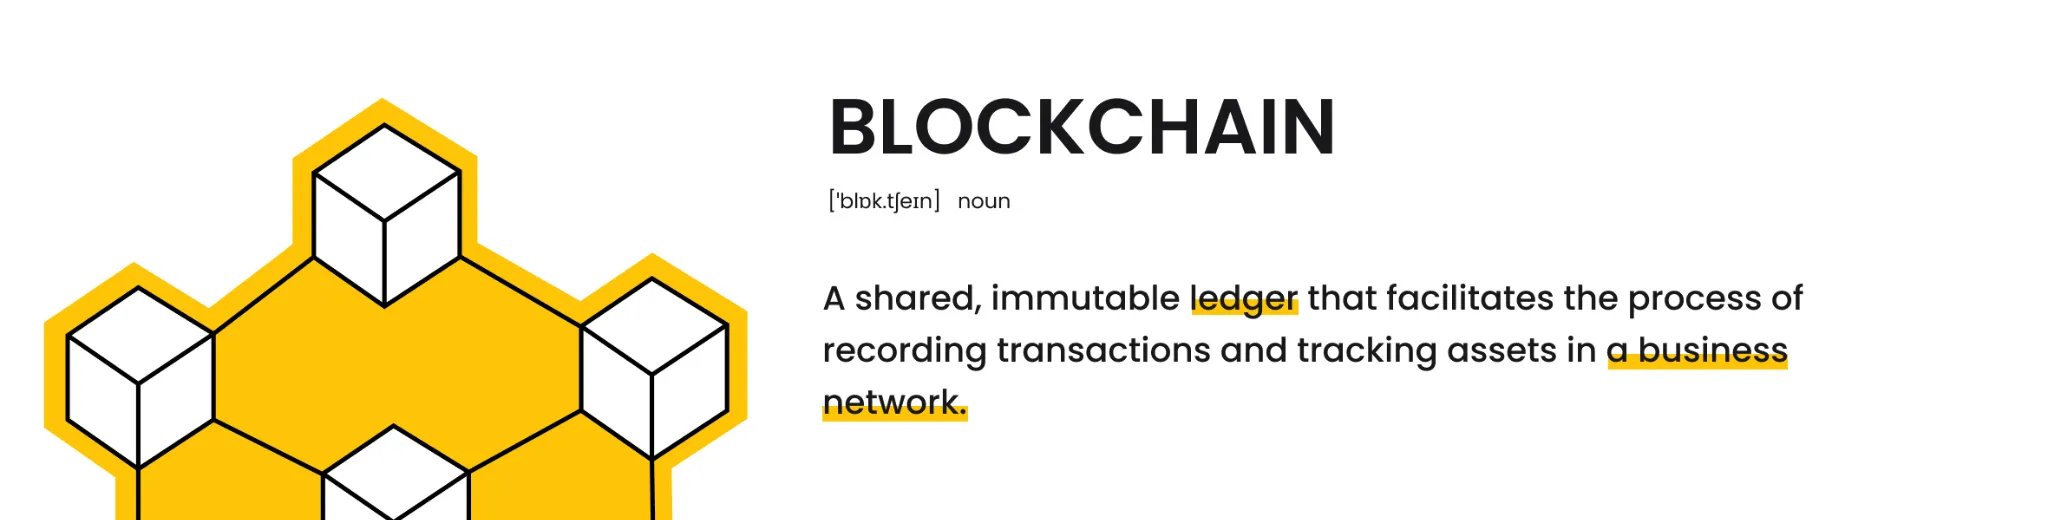 Blockchain Image